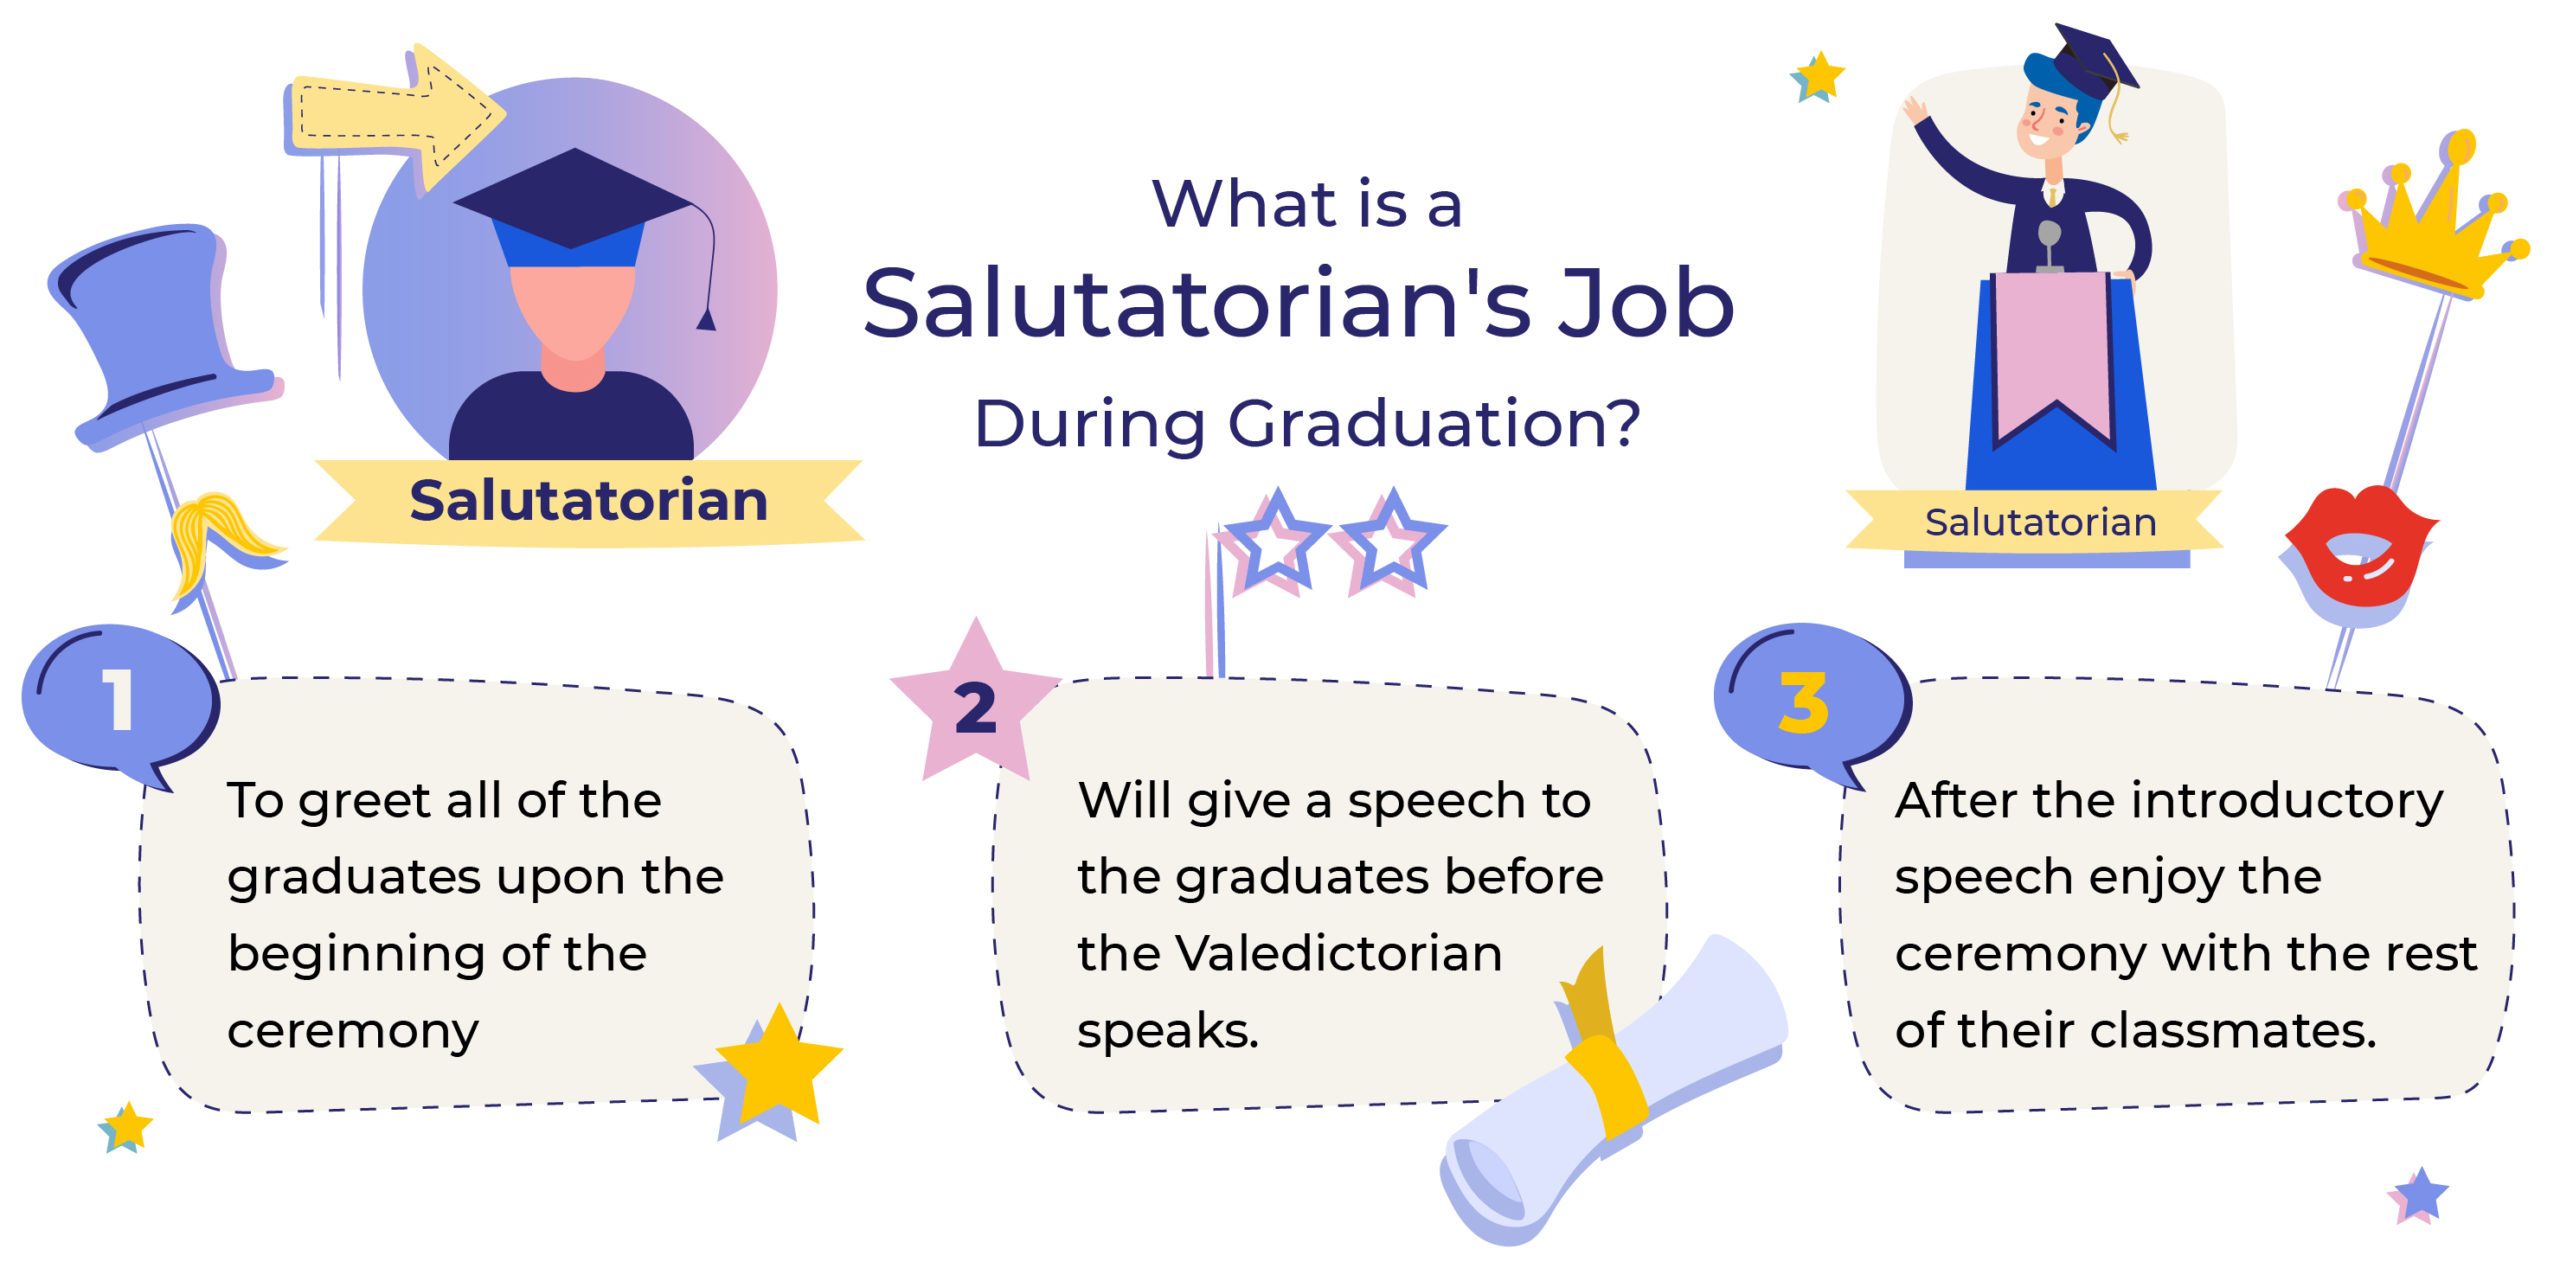 What is a Salutatorian's Job During Graduation